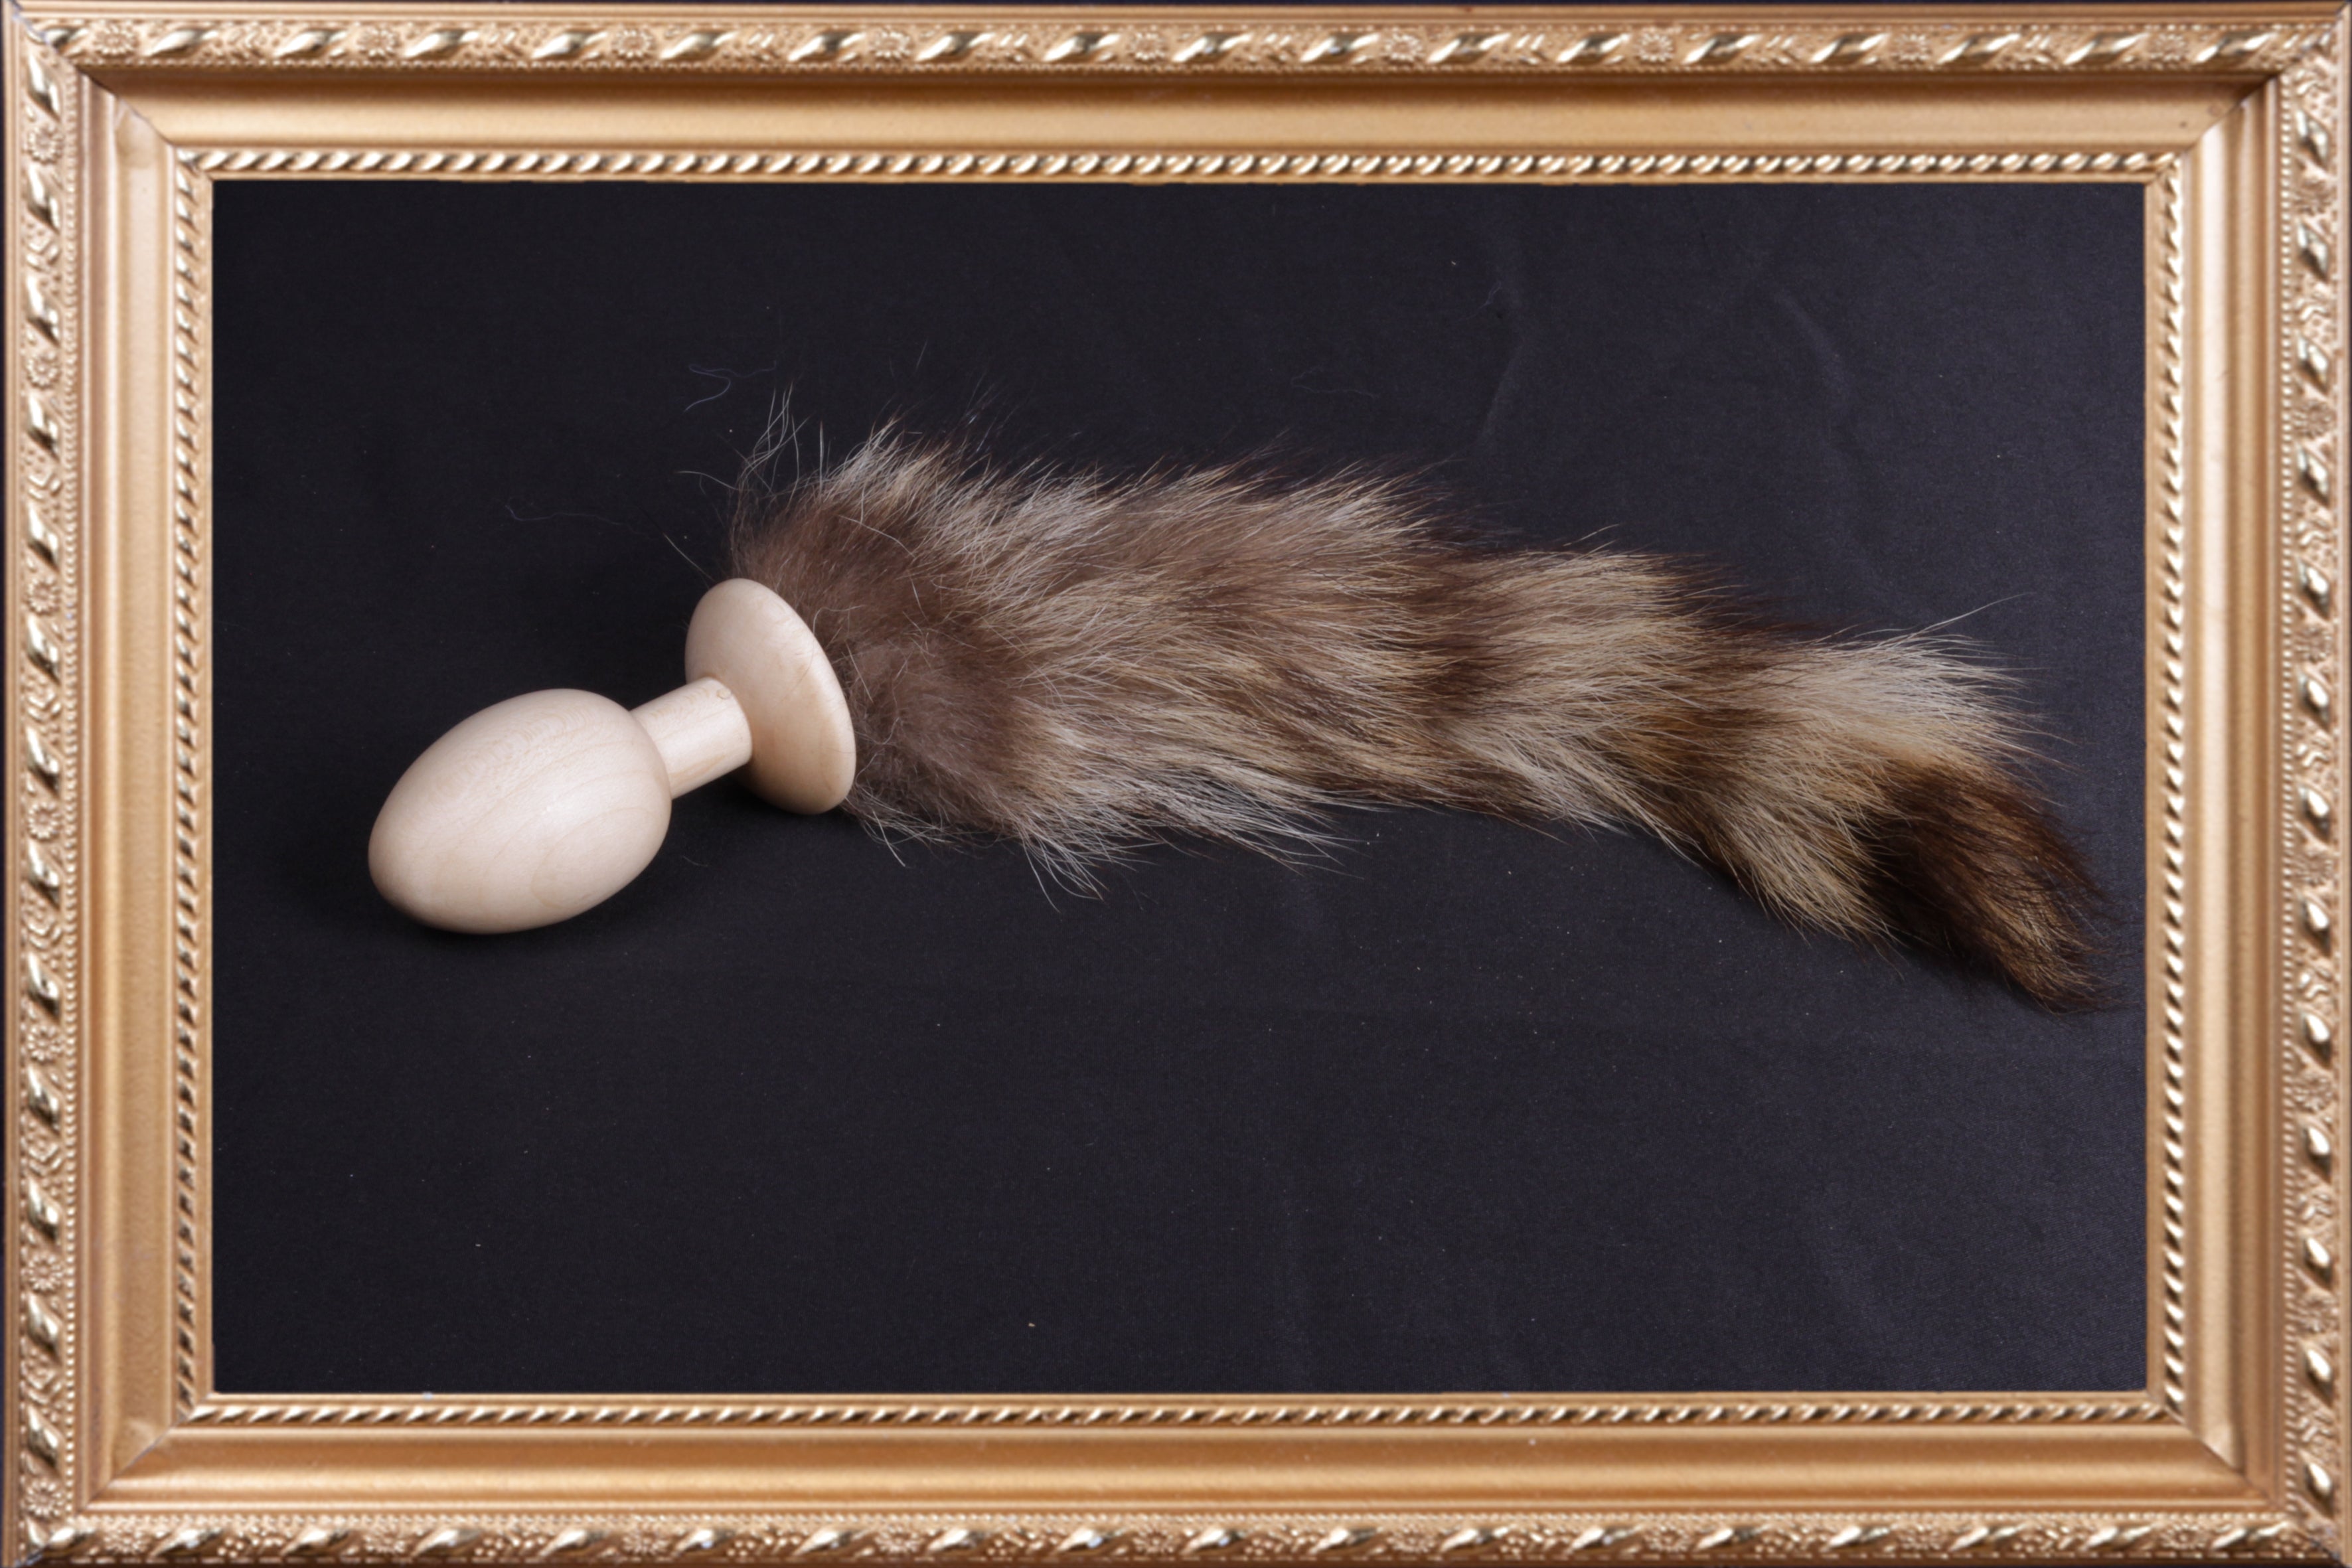 OACHKATZLSCHWOAF Ahorn Waschbär || Wooden Furry Tail Anal Butt Plug Holz|| Fox Bunny Raccoon || Sex Toy || Handmade by Holz-Knecht.at